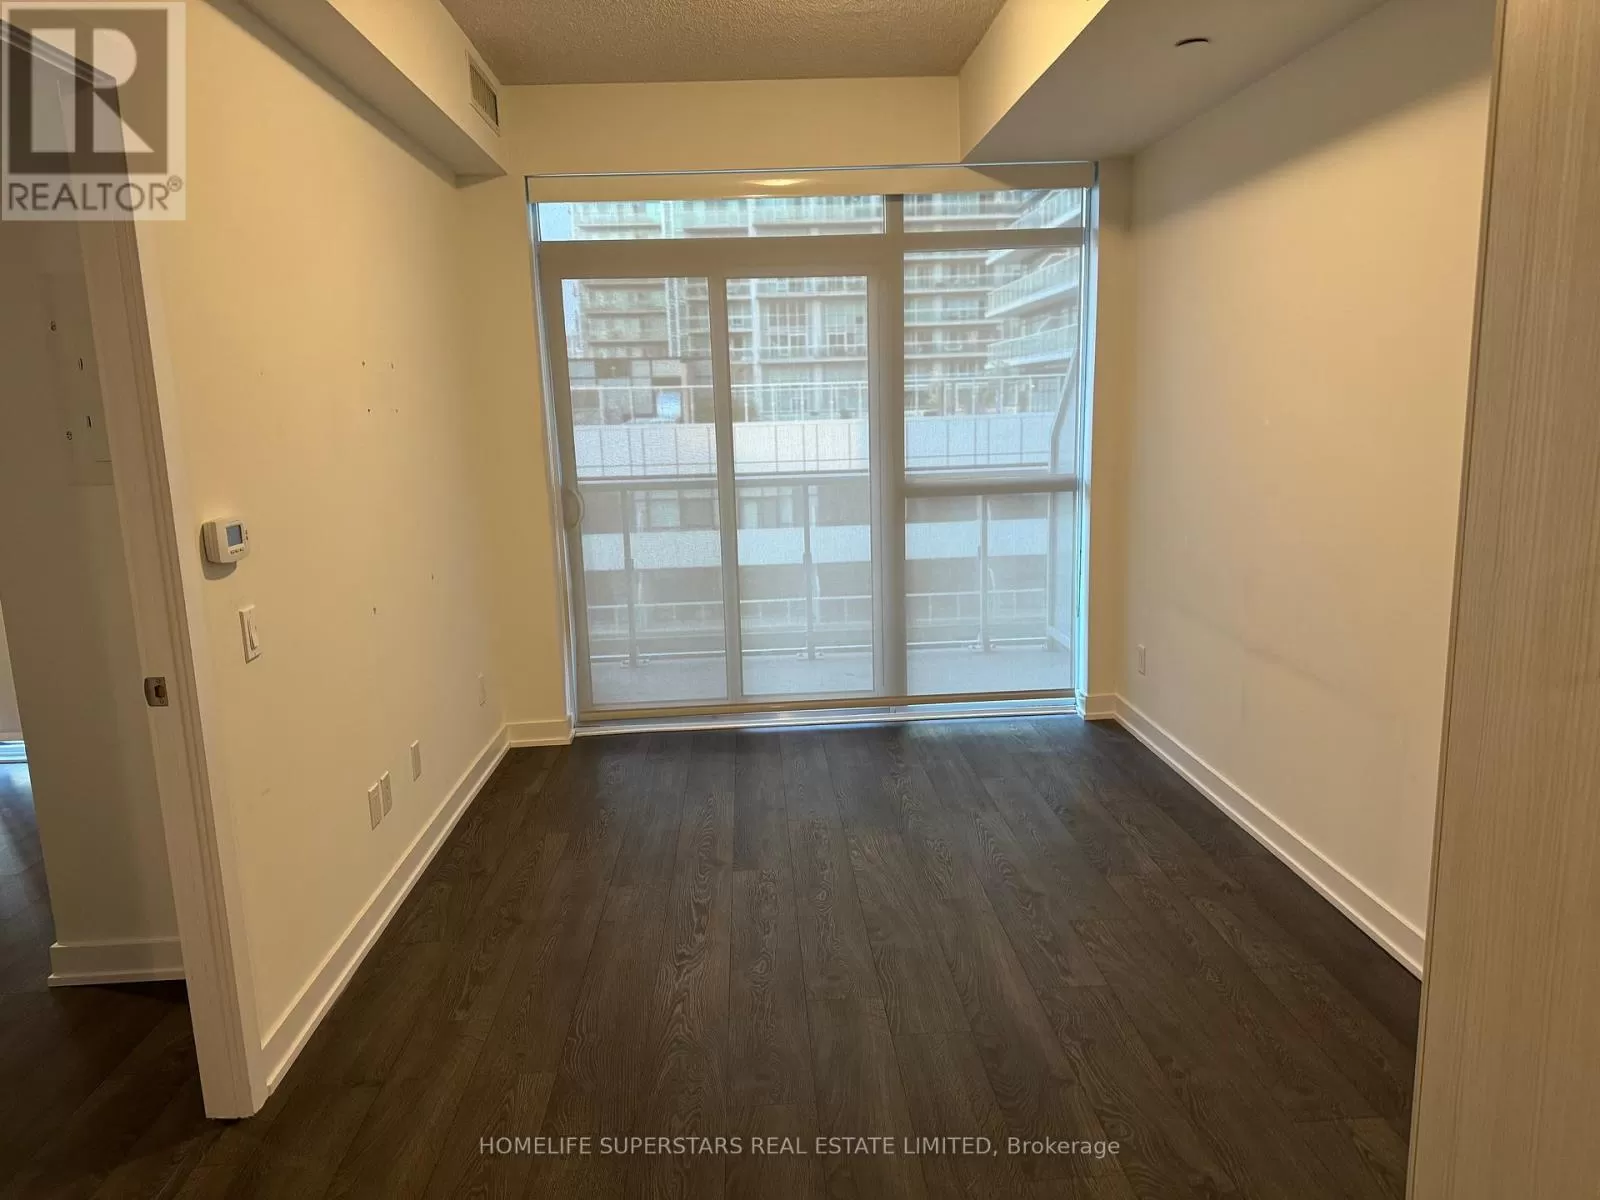 Apartment for rent: 518 - 251 Manitoba Street, Toronto, Ontario M8Y 0C7